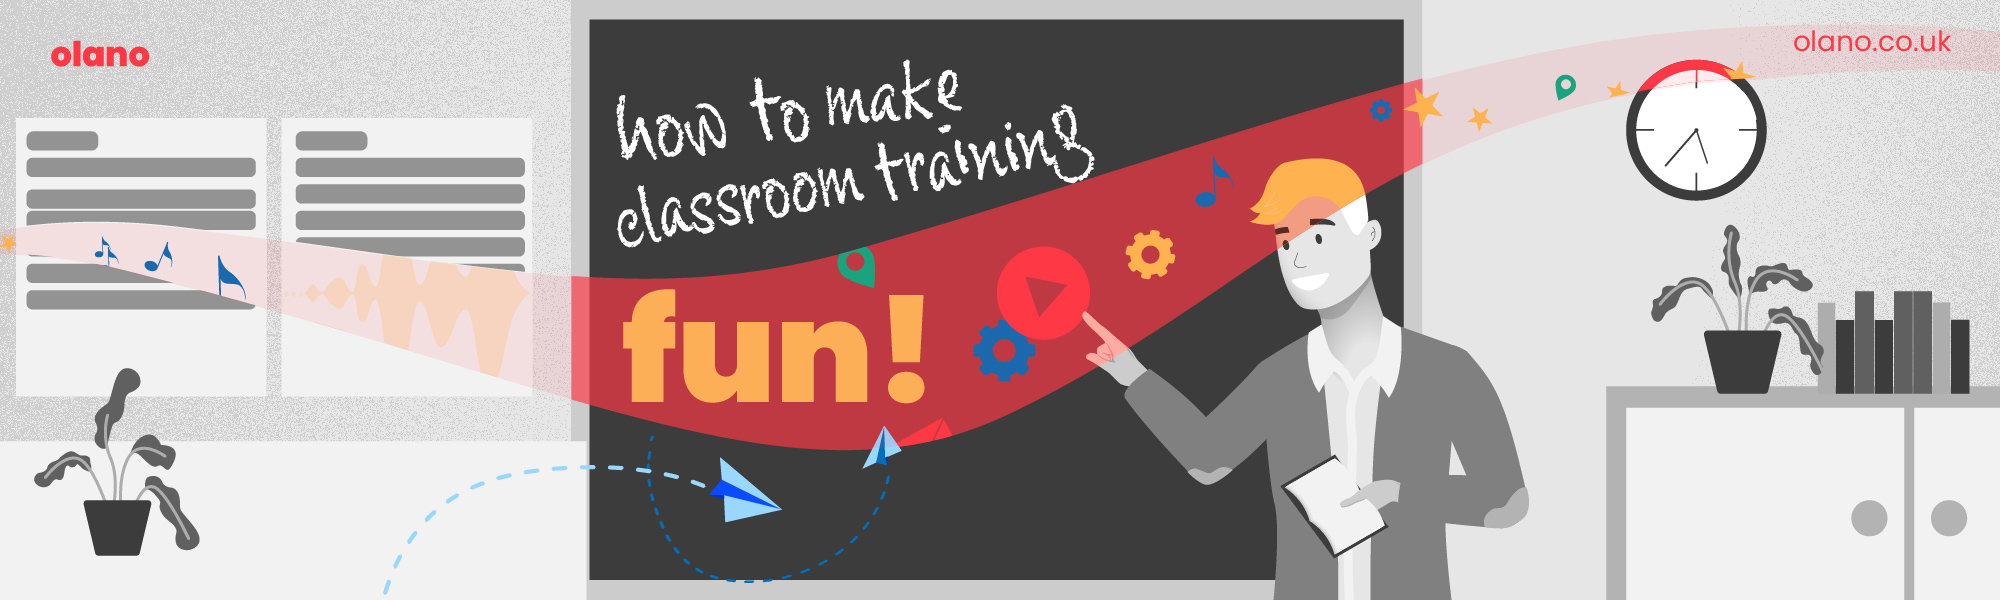 how to make classroom training fun